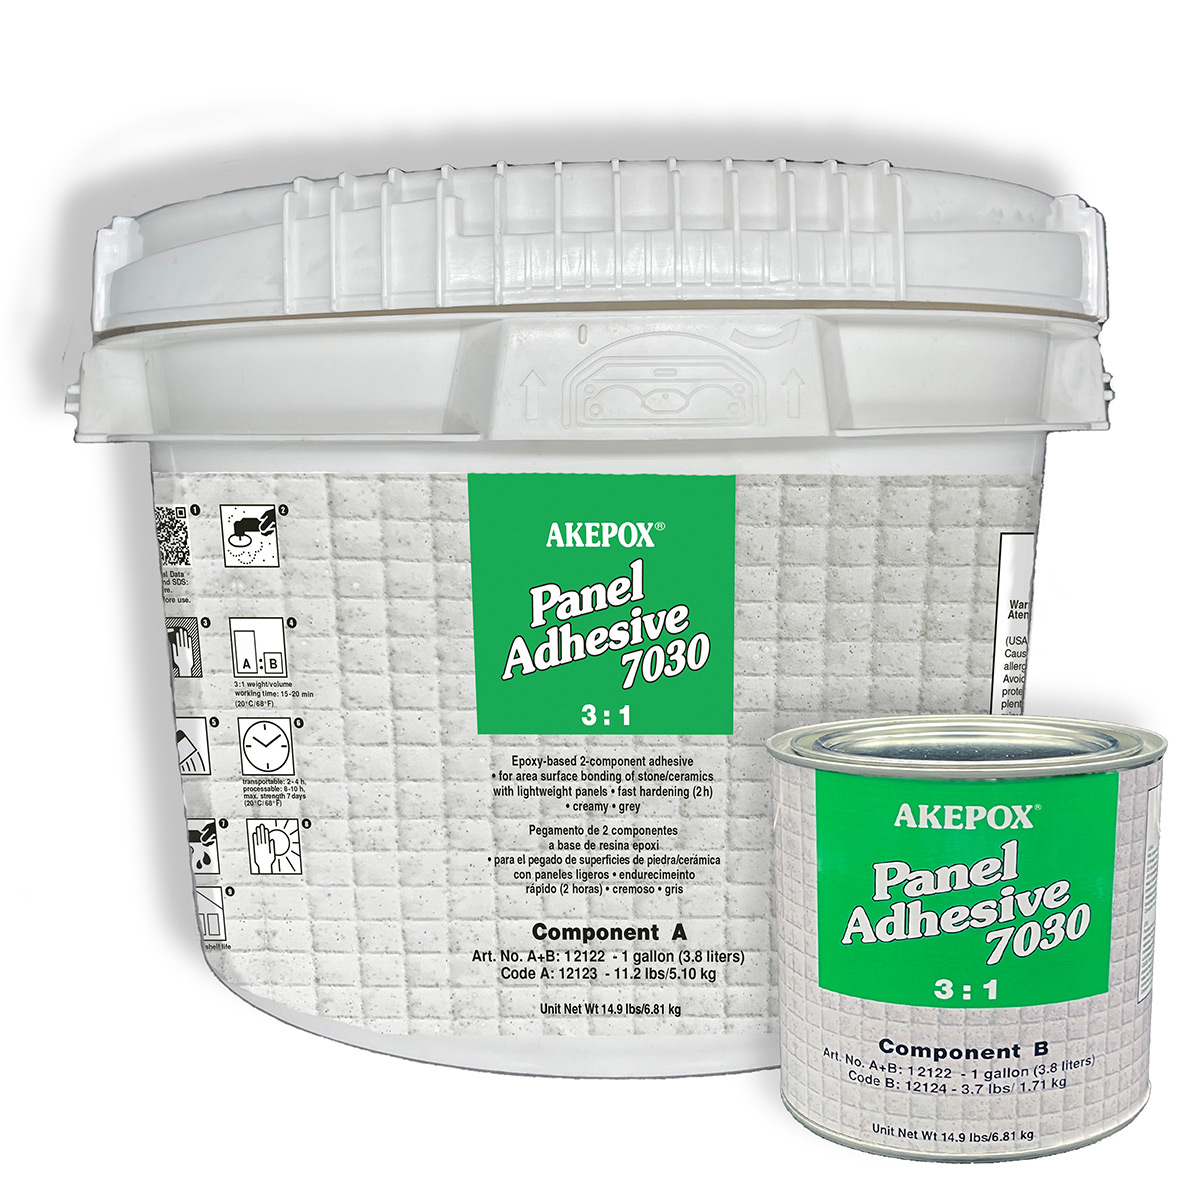 AKEPOX® Panel Adhesive 7030